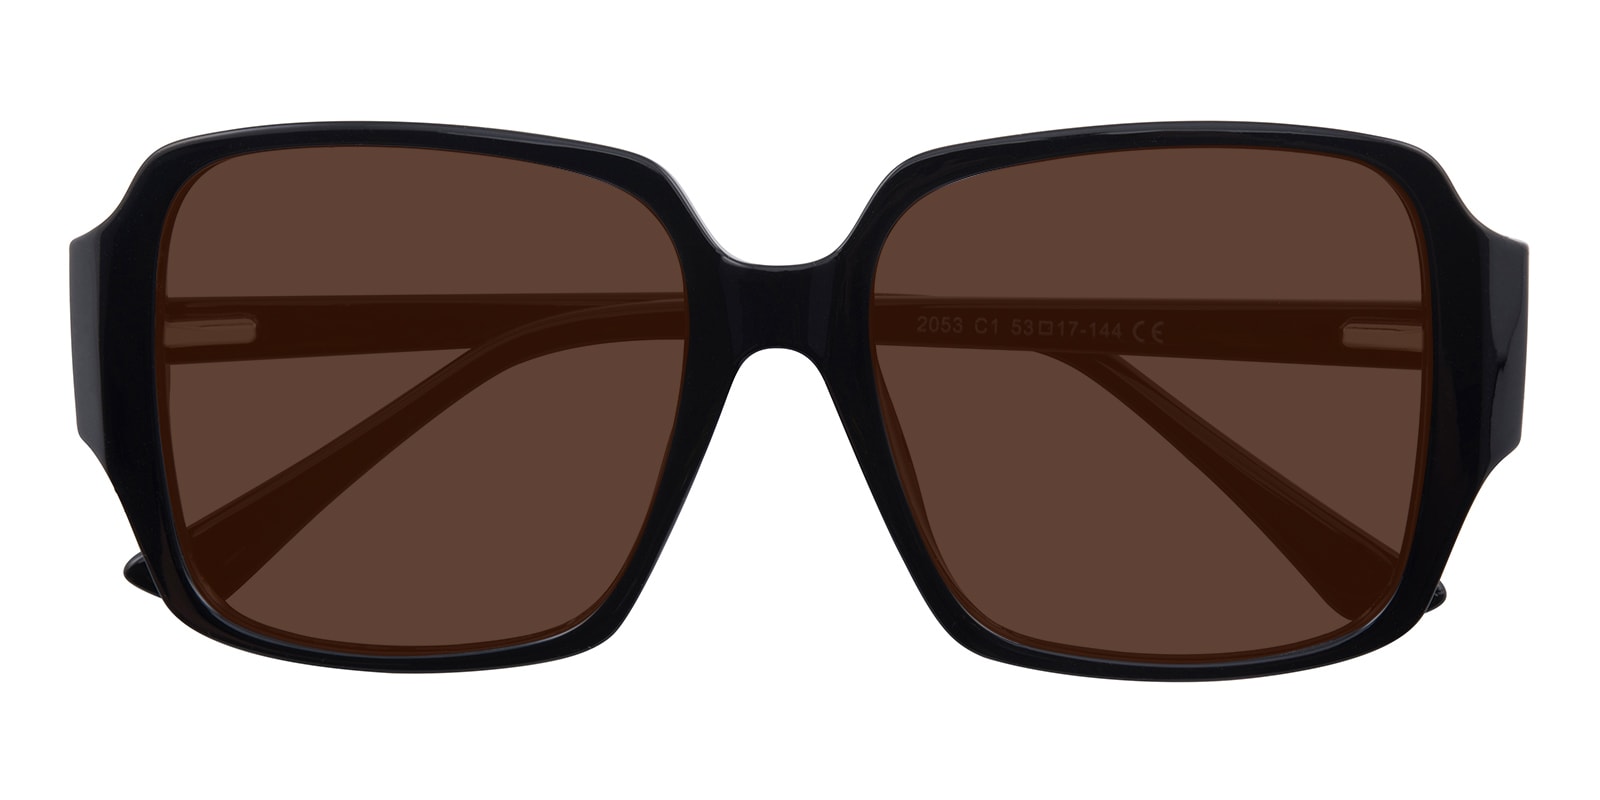 Square Sunglasses, Full Frame Black Plastic - SUP1157